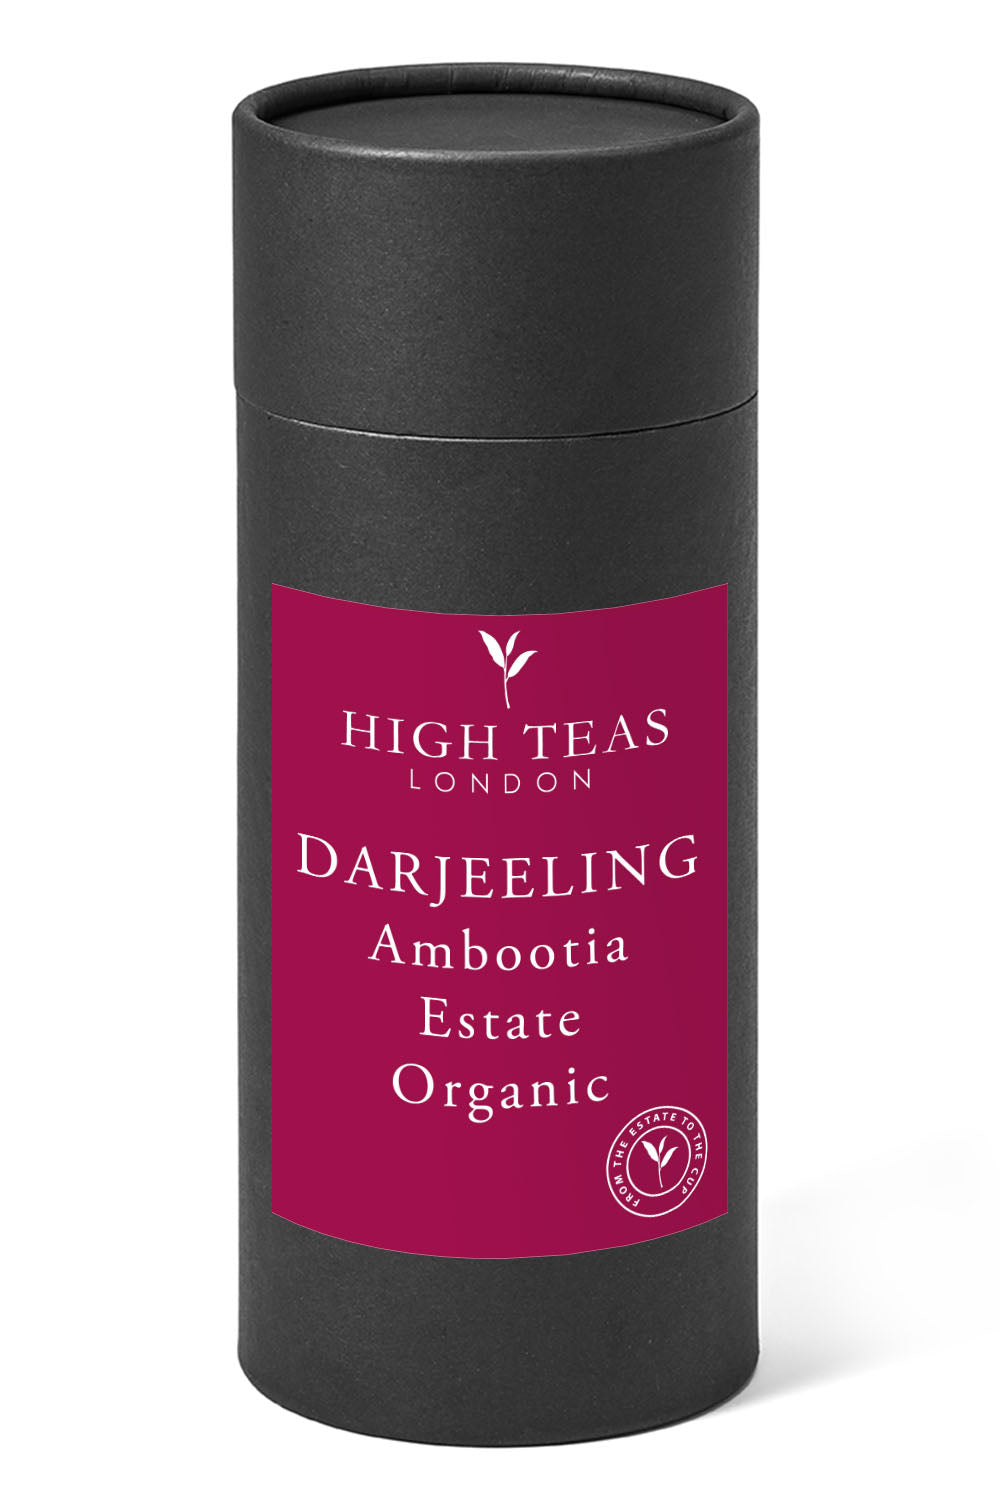 Darjeeling Ambootia Estate 1st Flush SFTGFOP1 Organic-150g gift-Loose Leaf Tea-High Teas